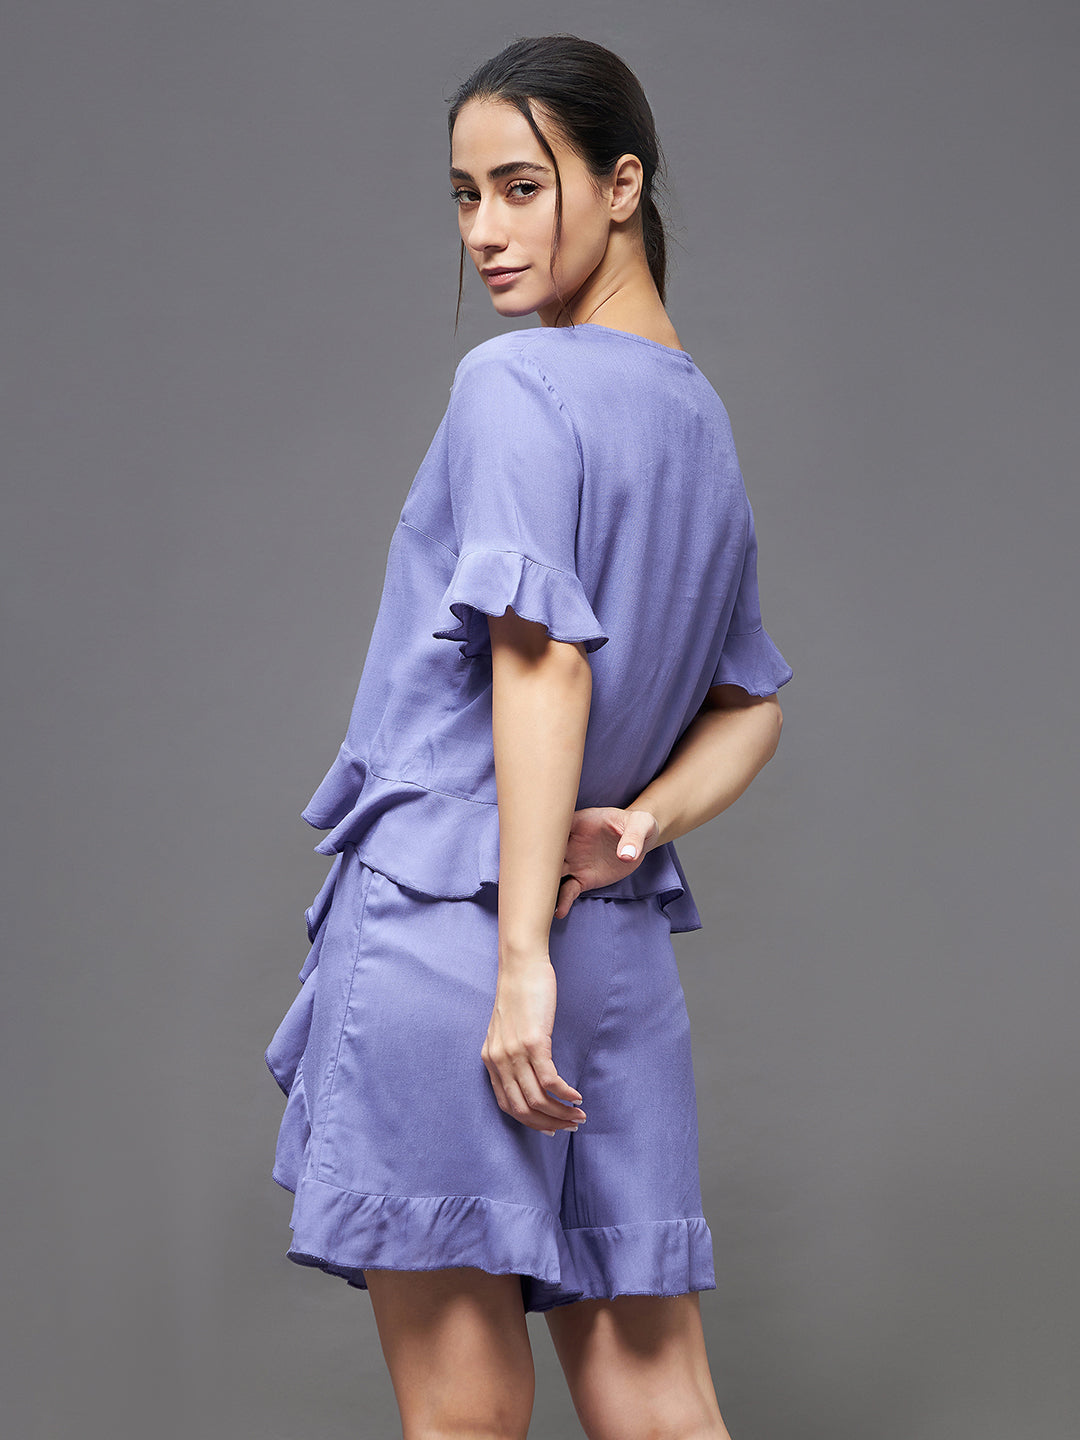 Women's Lavender V Neck Short Sleeve Solid Frill at the hem Short Top & Shorts Sets